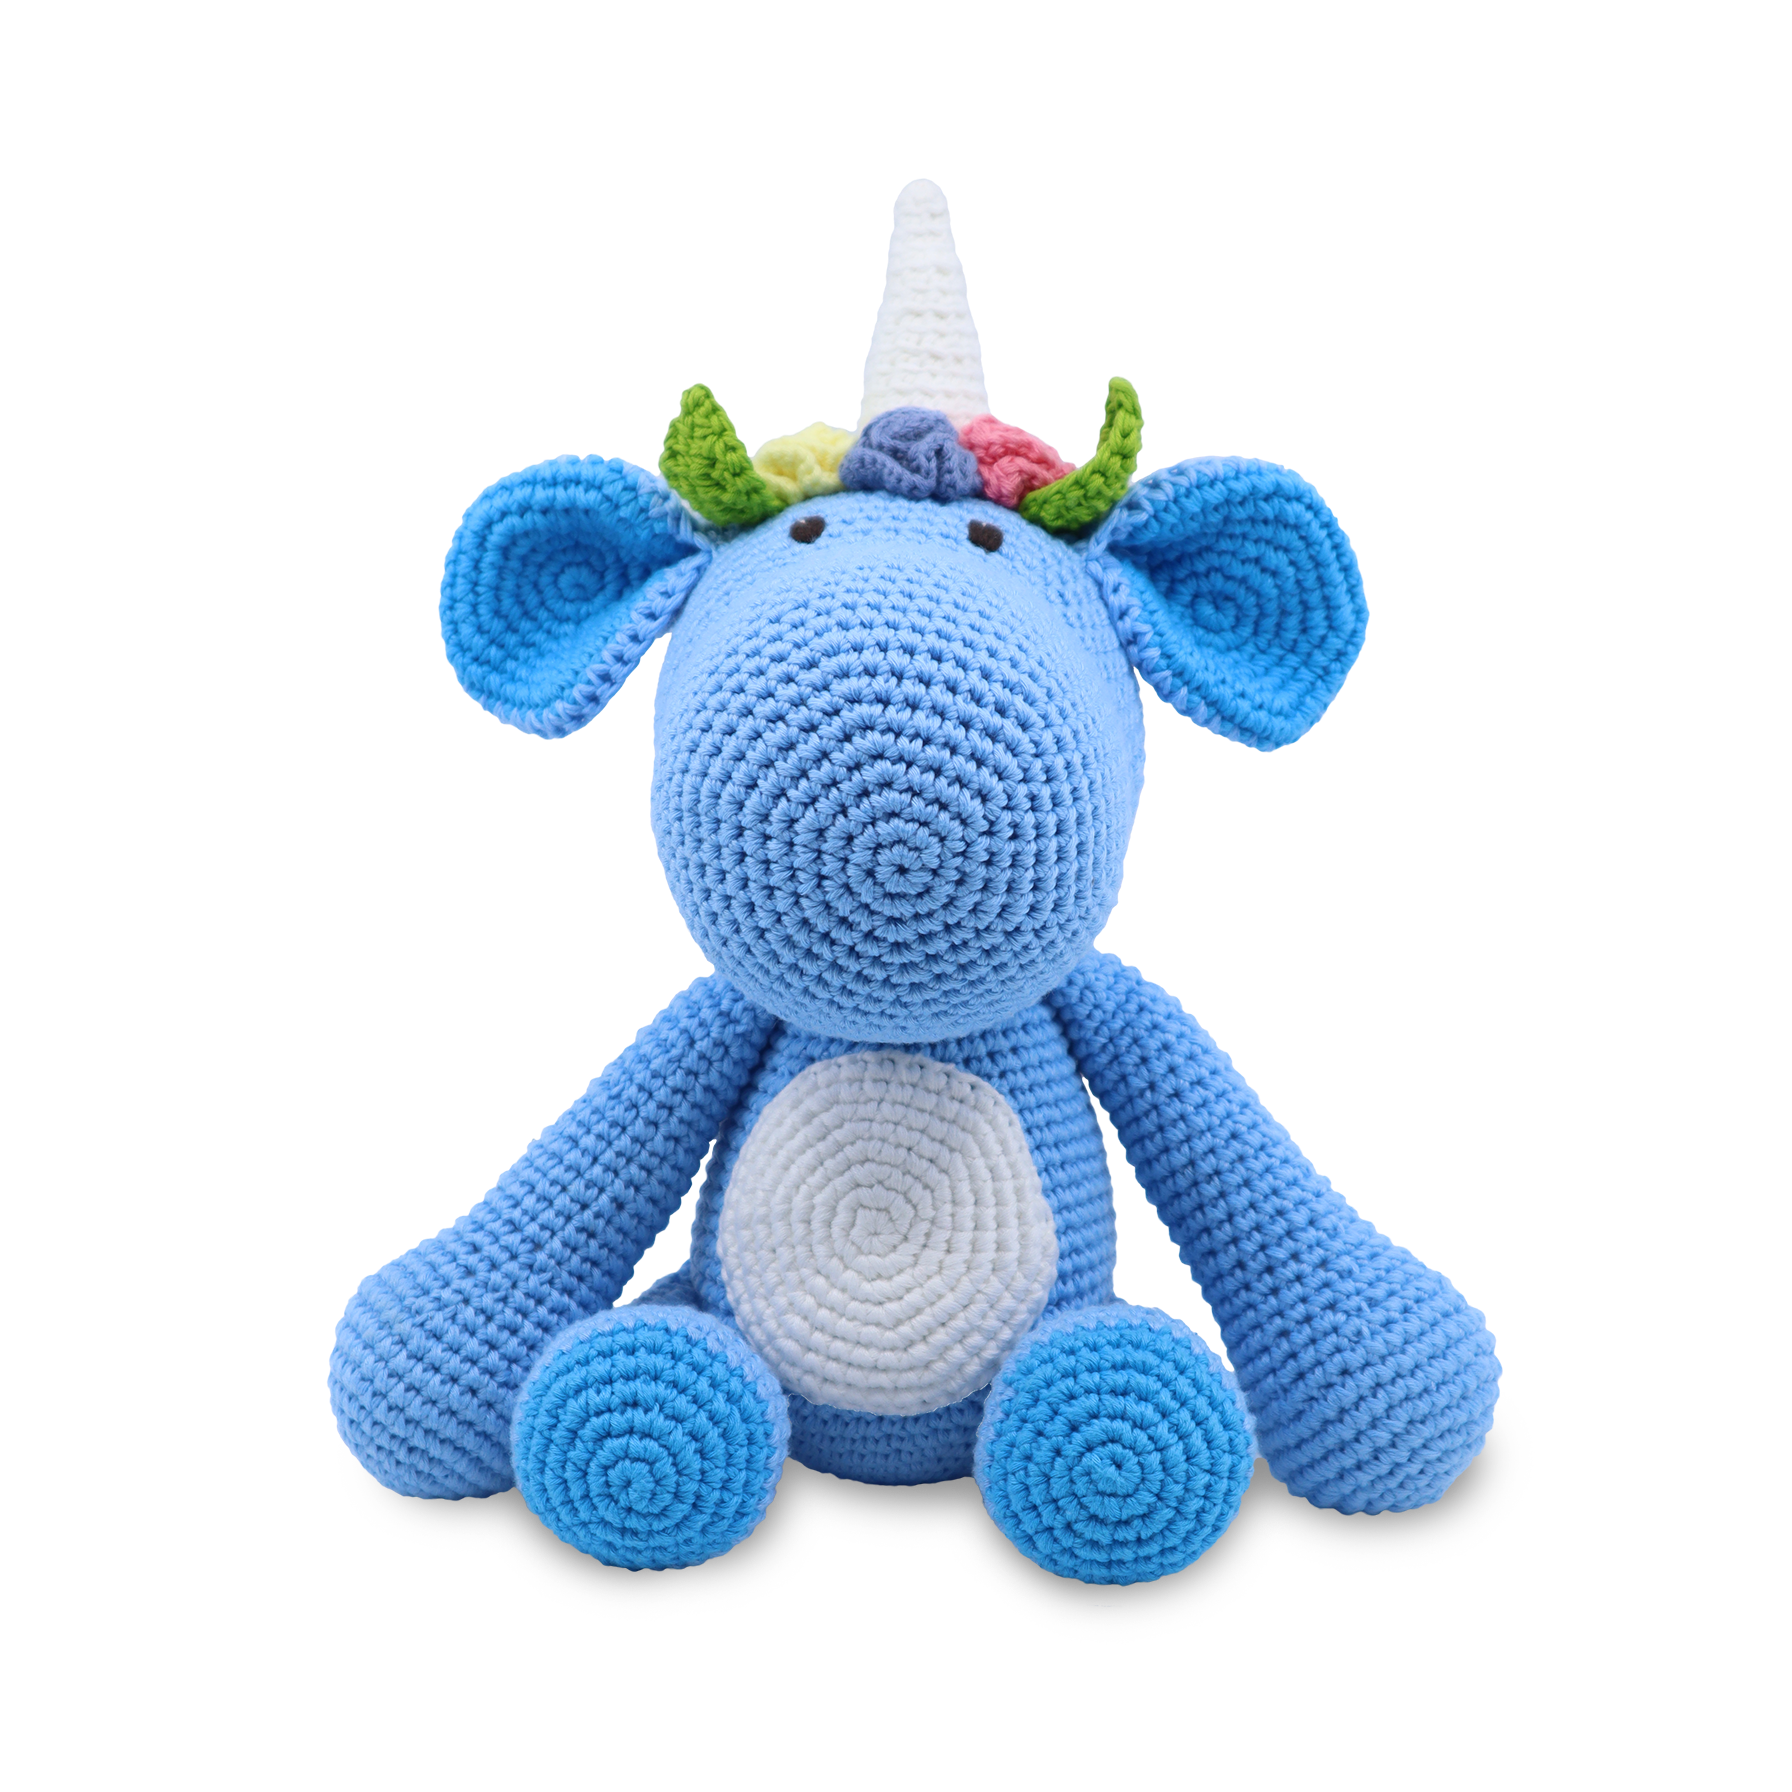 Snuggle Buddies - Medium Sitting Toy Unicorn Blue